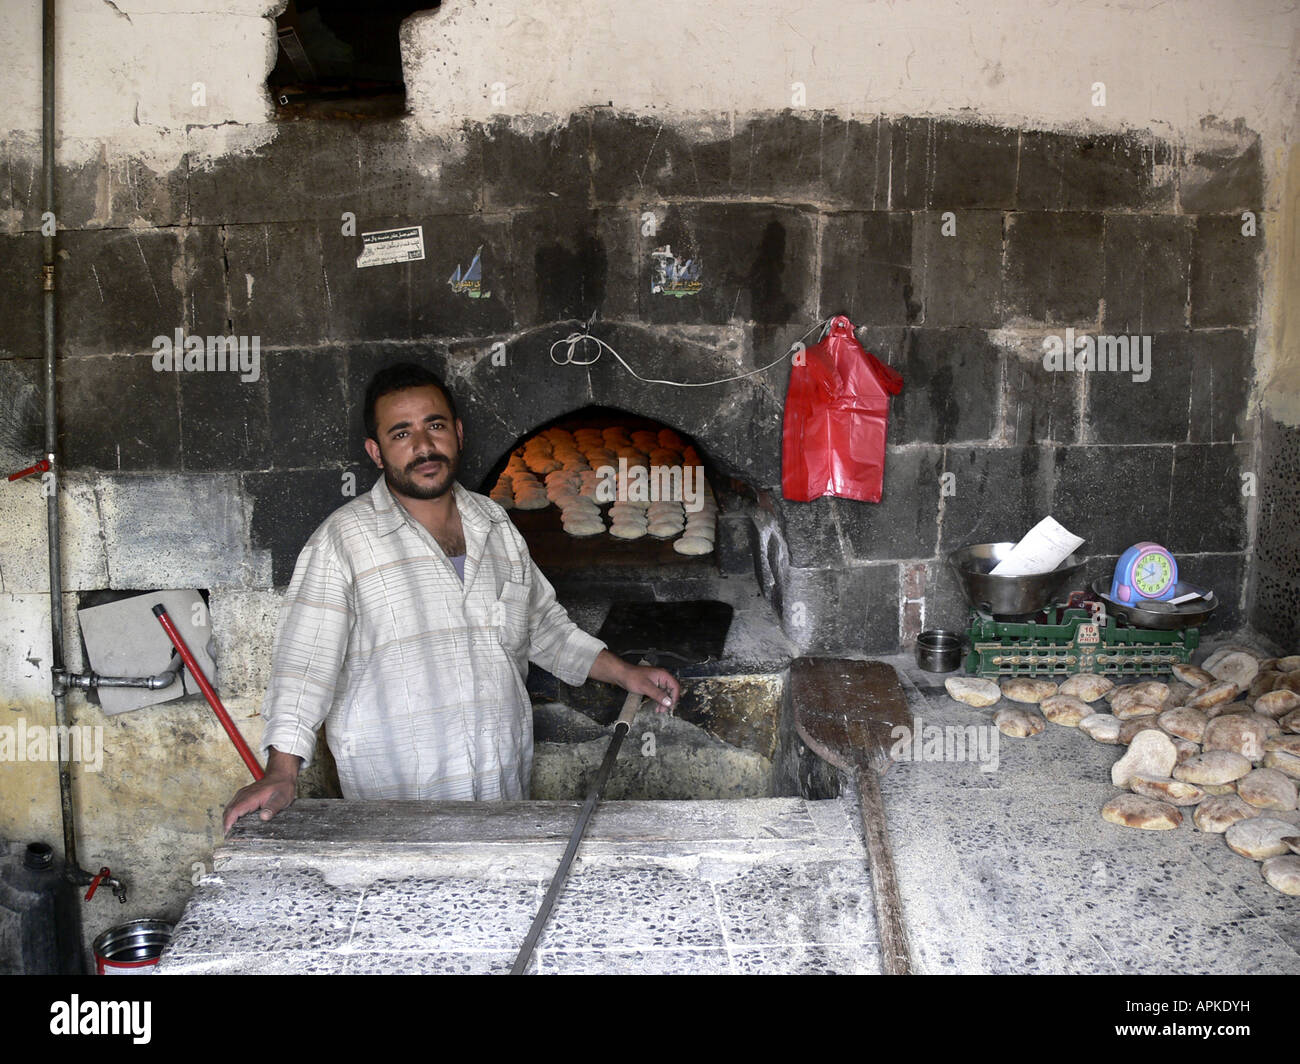 baker in old town, Yemen, Sanaa Stock Photo